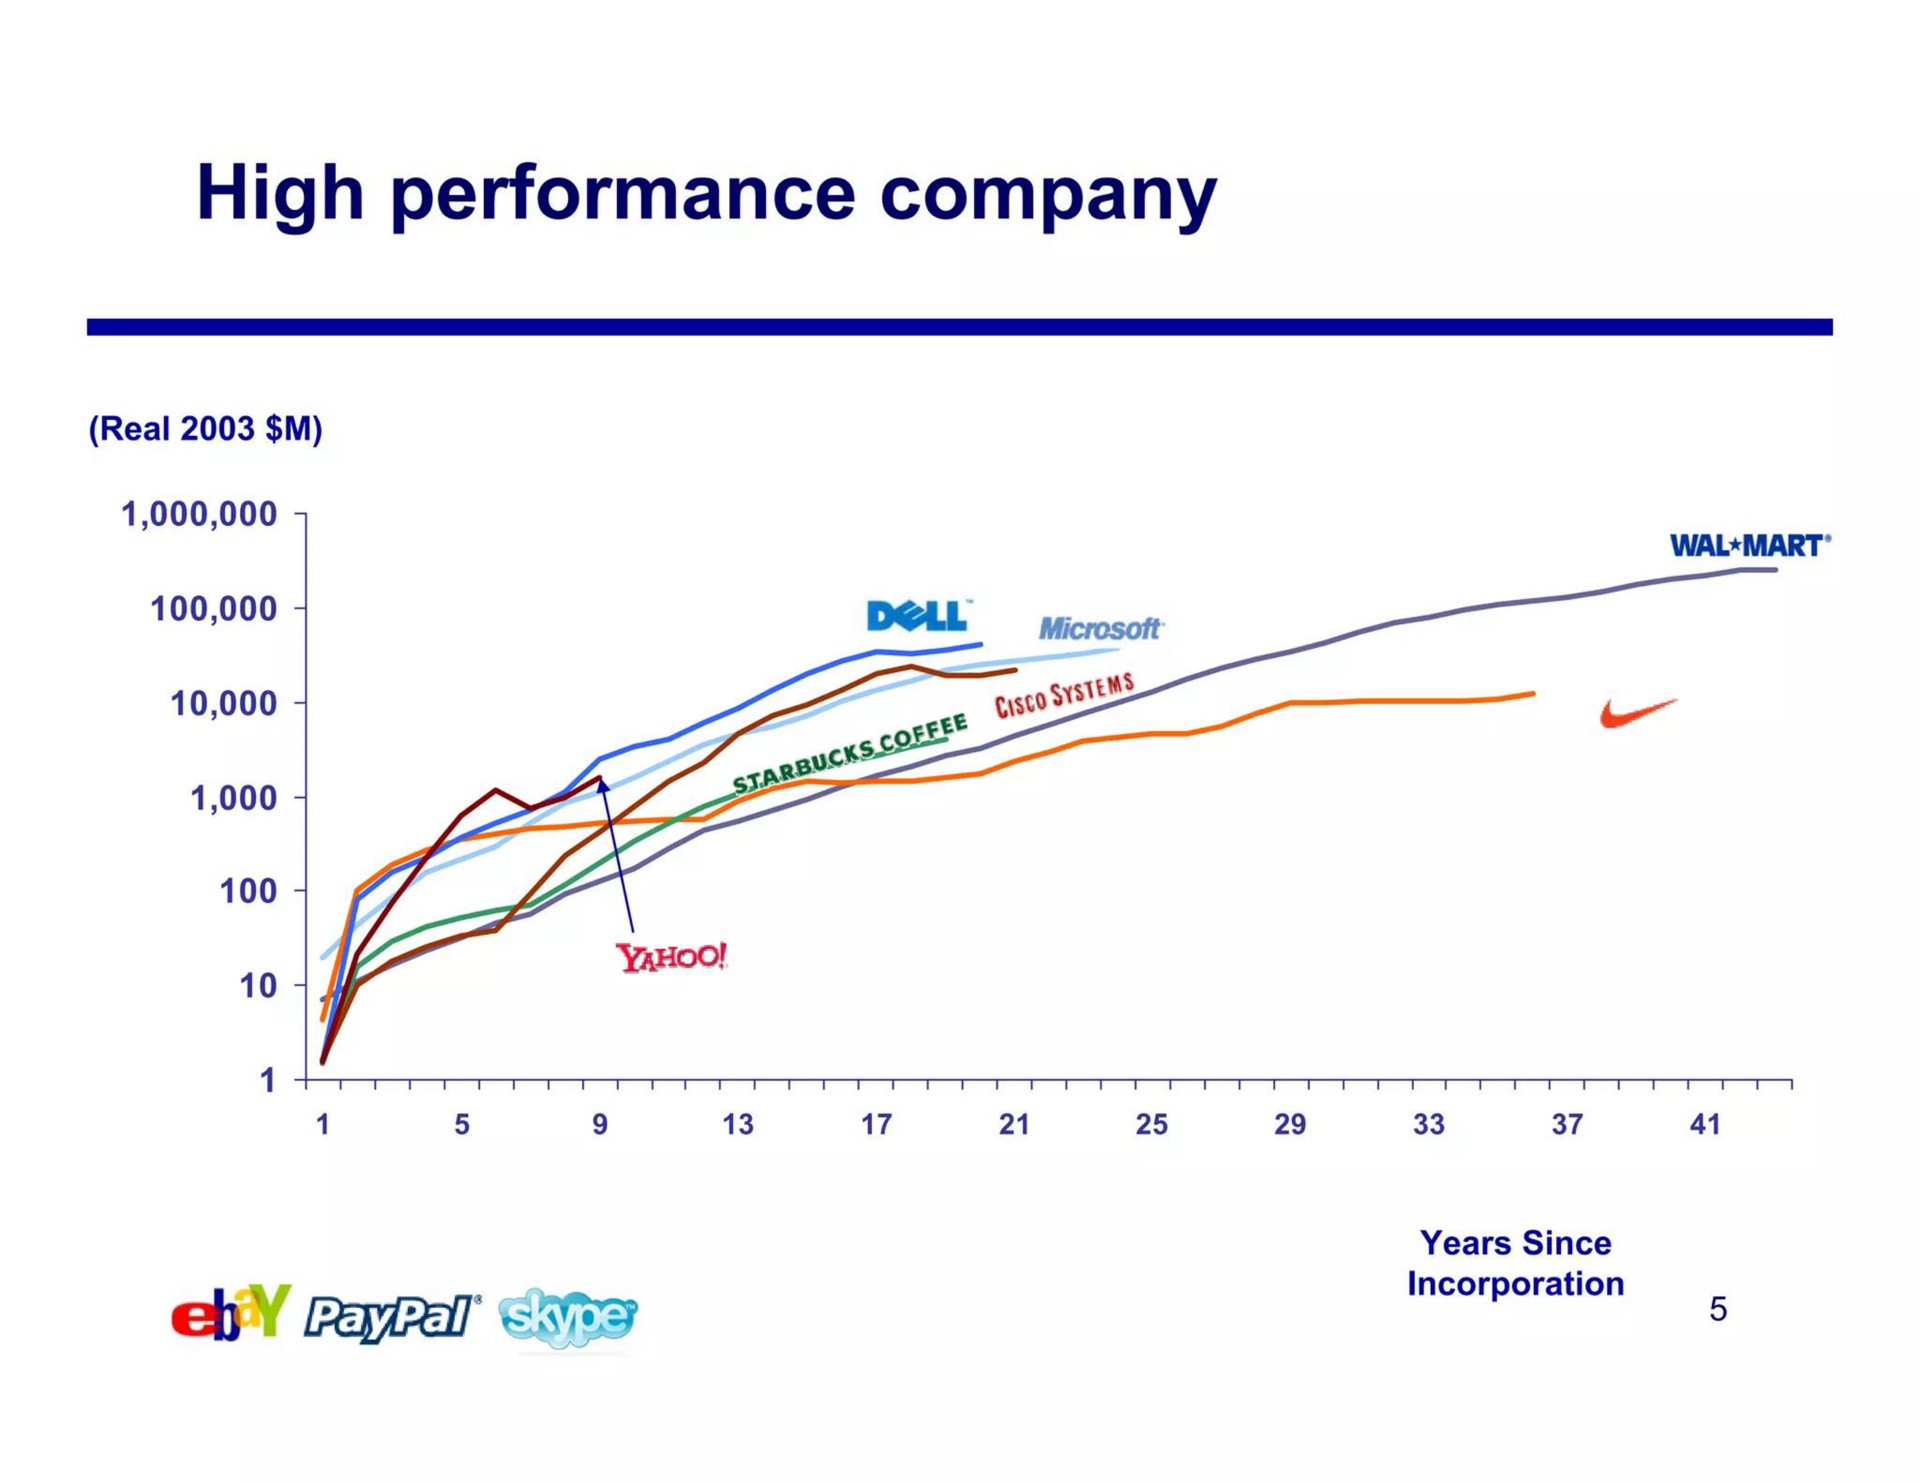 high performance company | eBay